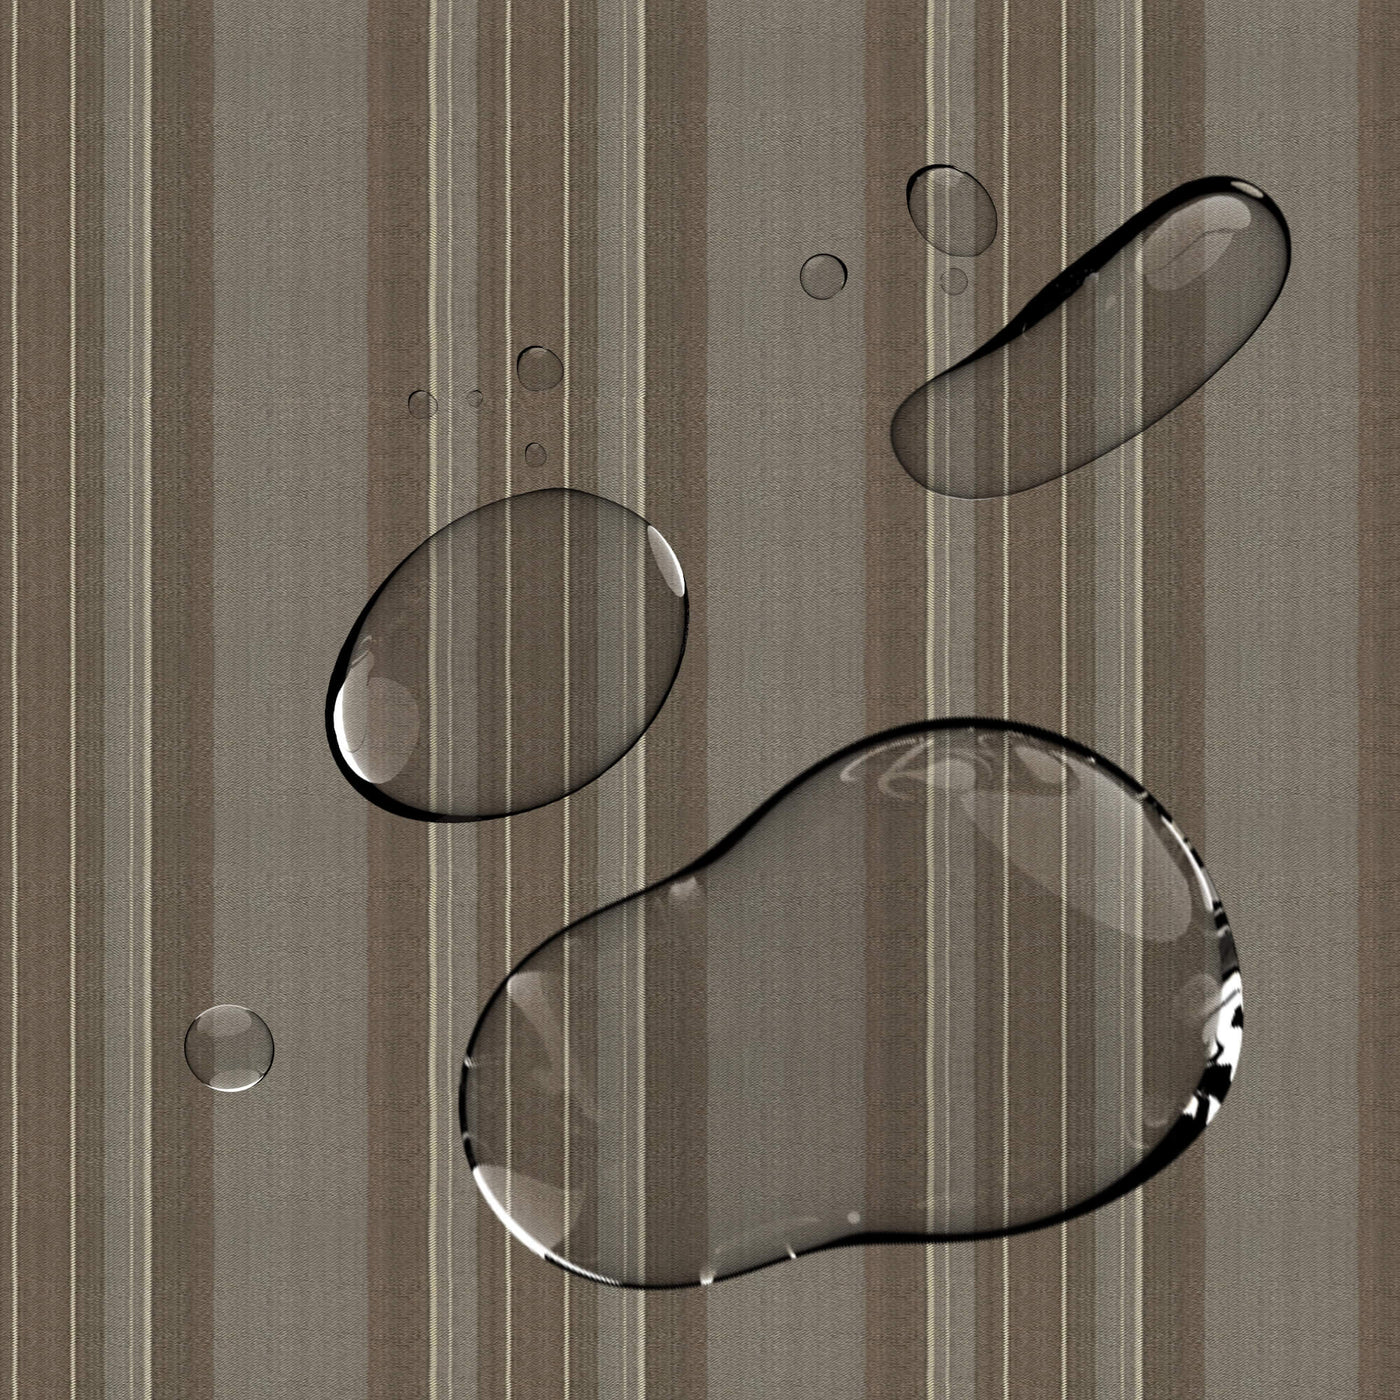 PENGI Outdoor Curtains Waterproof - Stripe Khaki